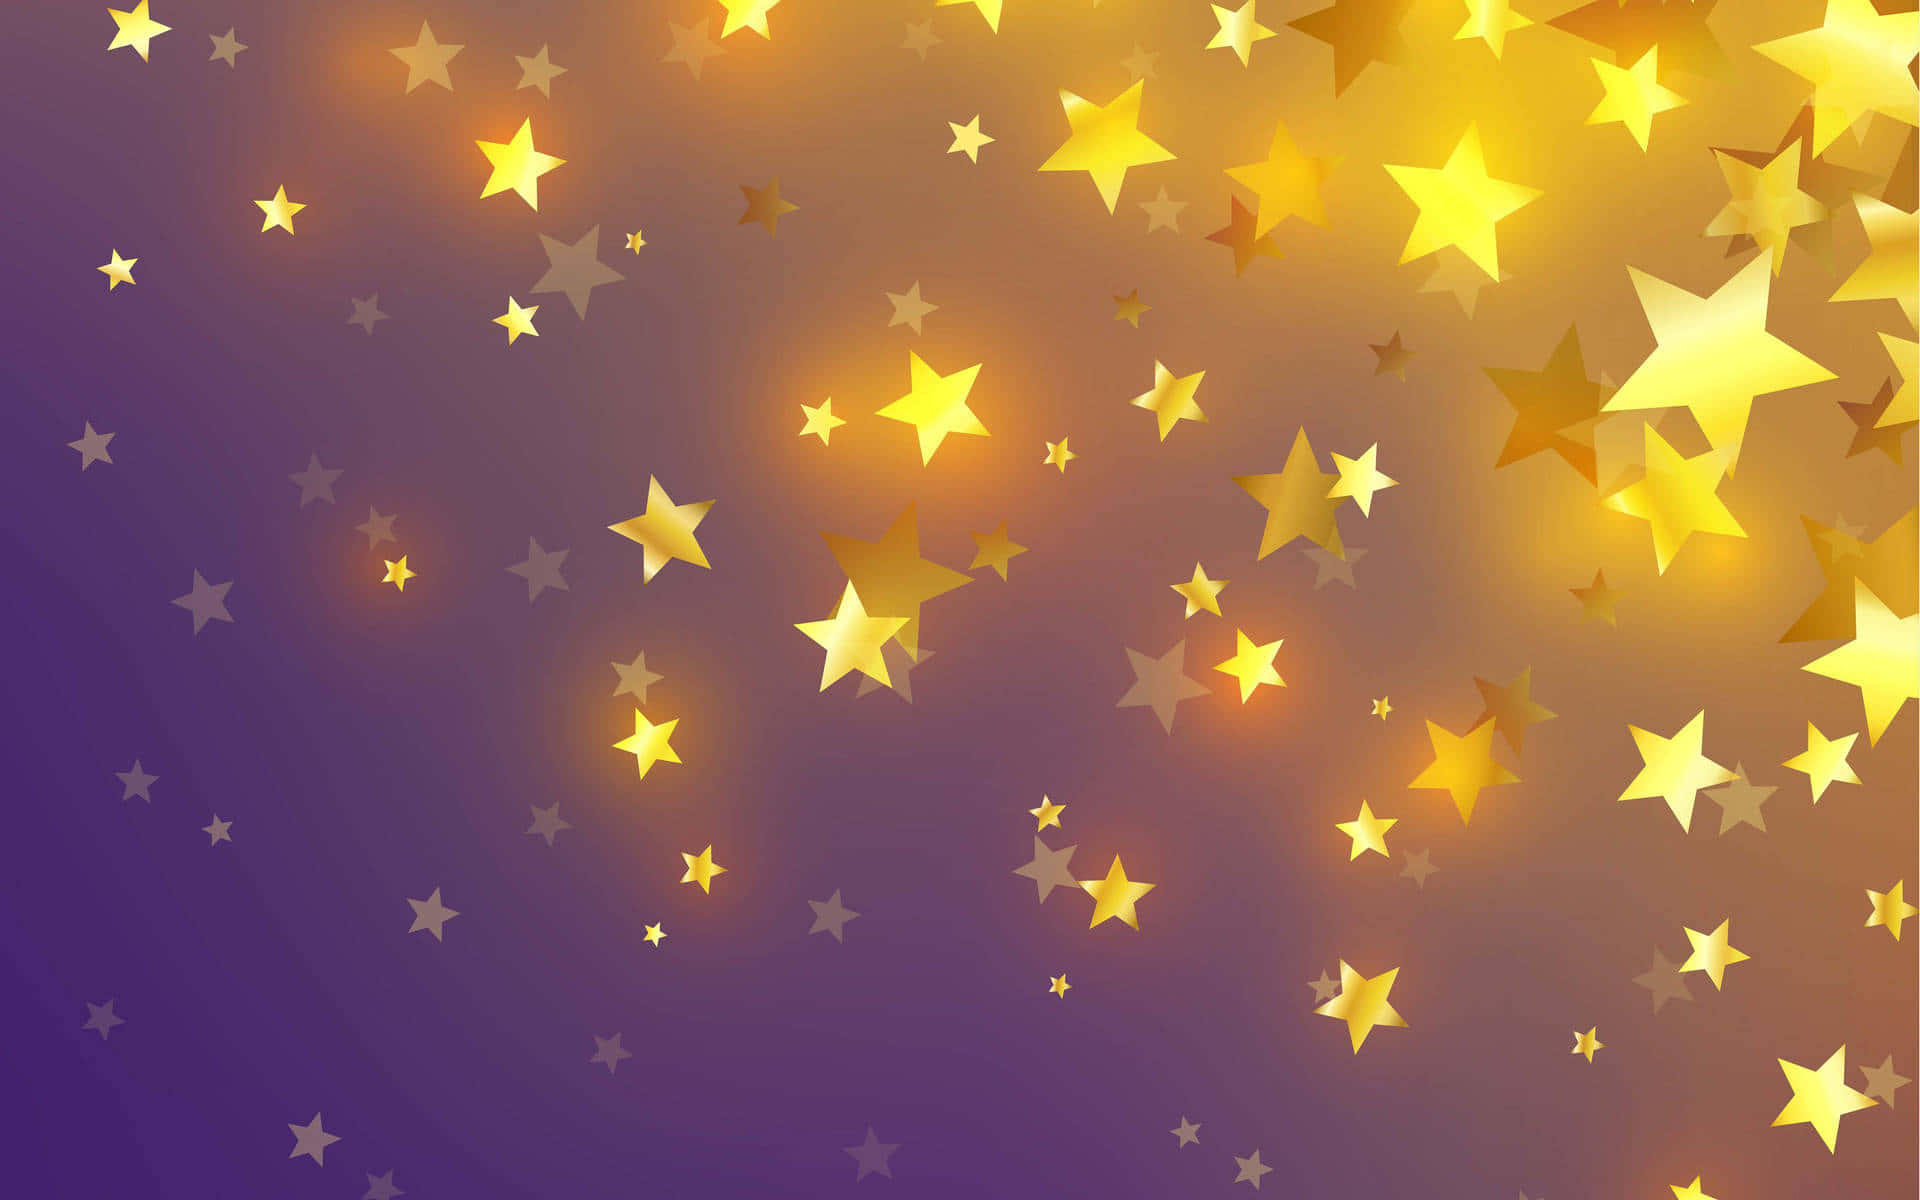 golden stars falling on a purple background